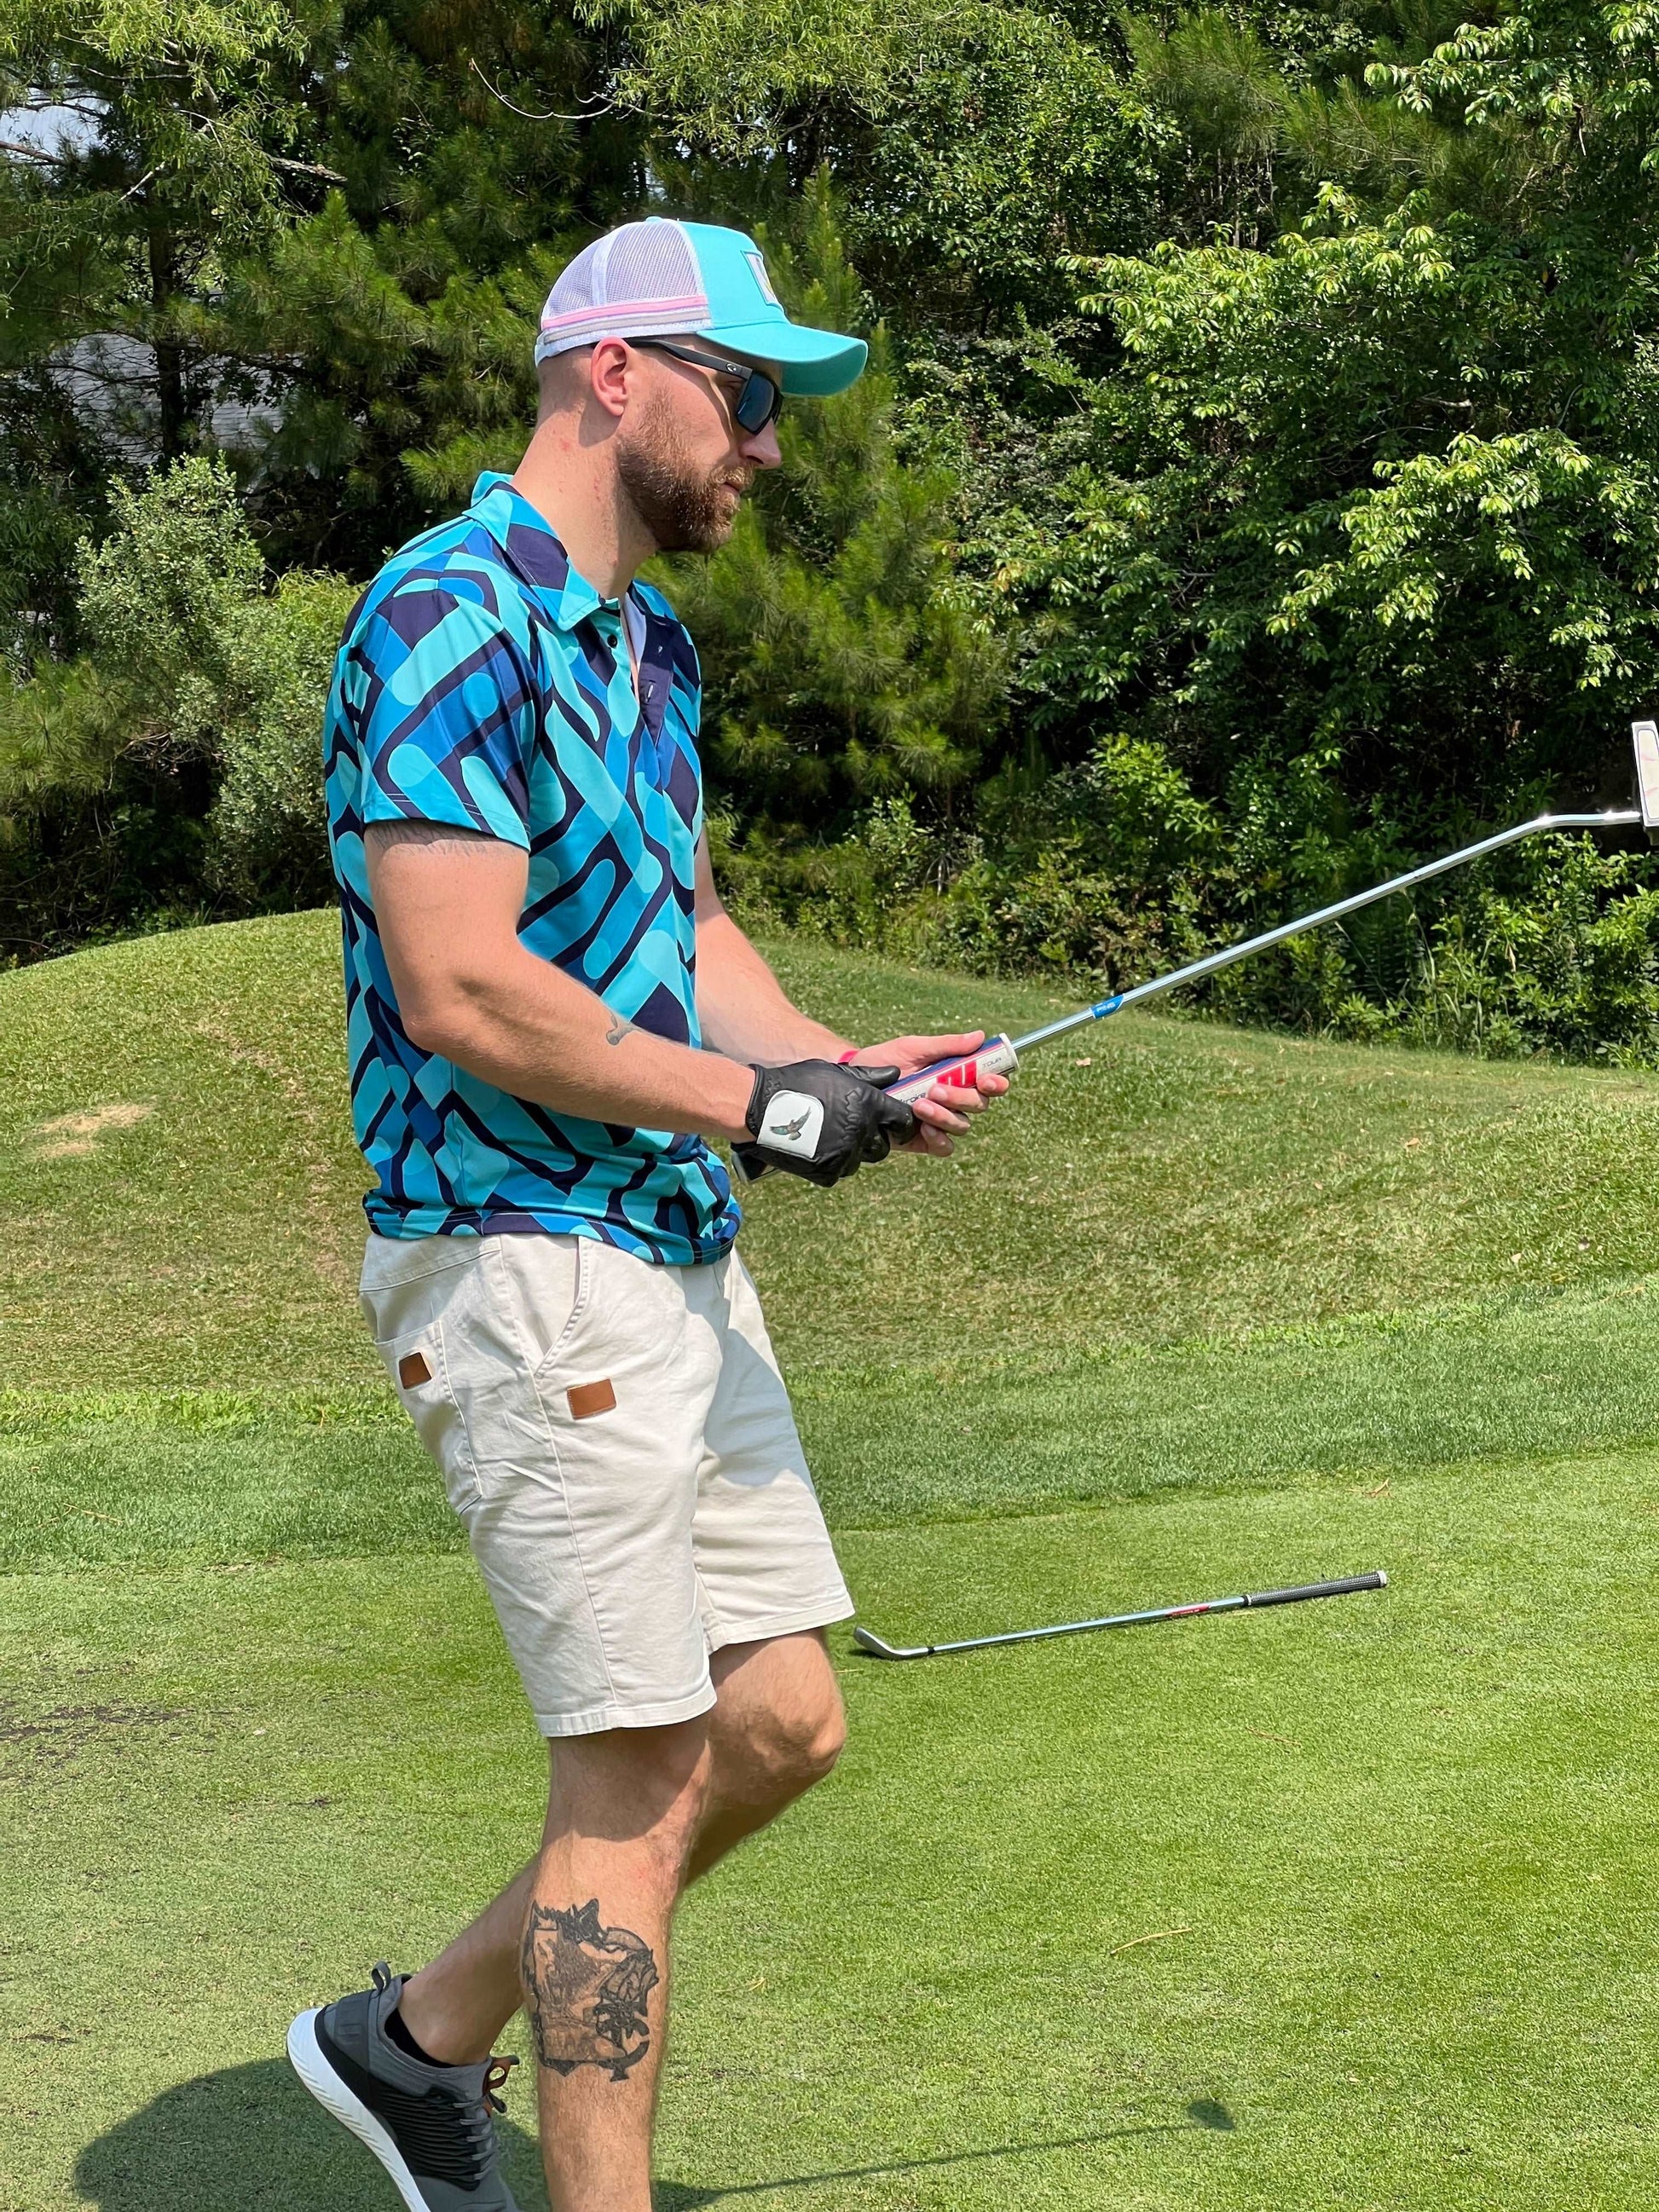 blue golf shirt "course craze" by kea golf. blue golf polo